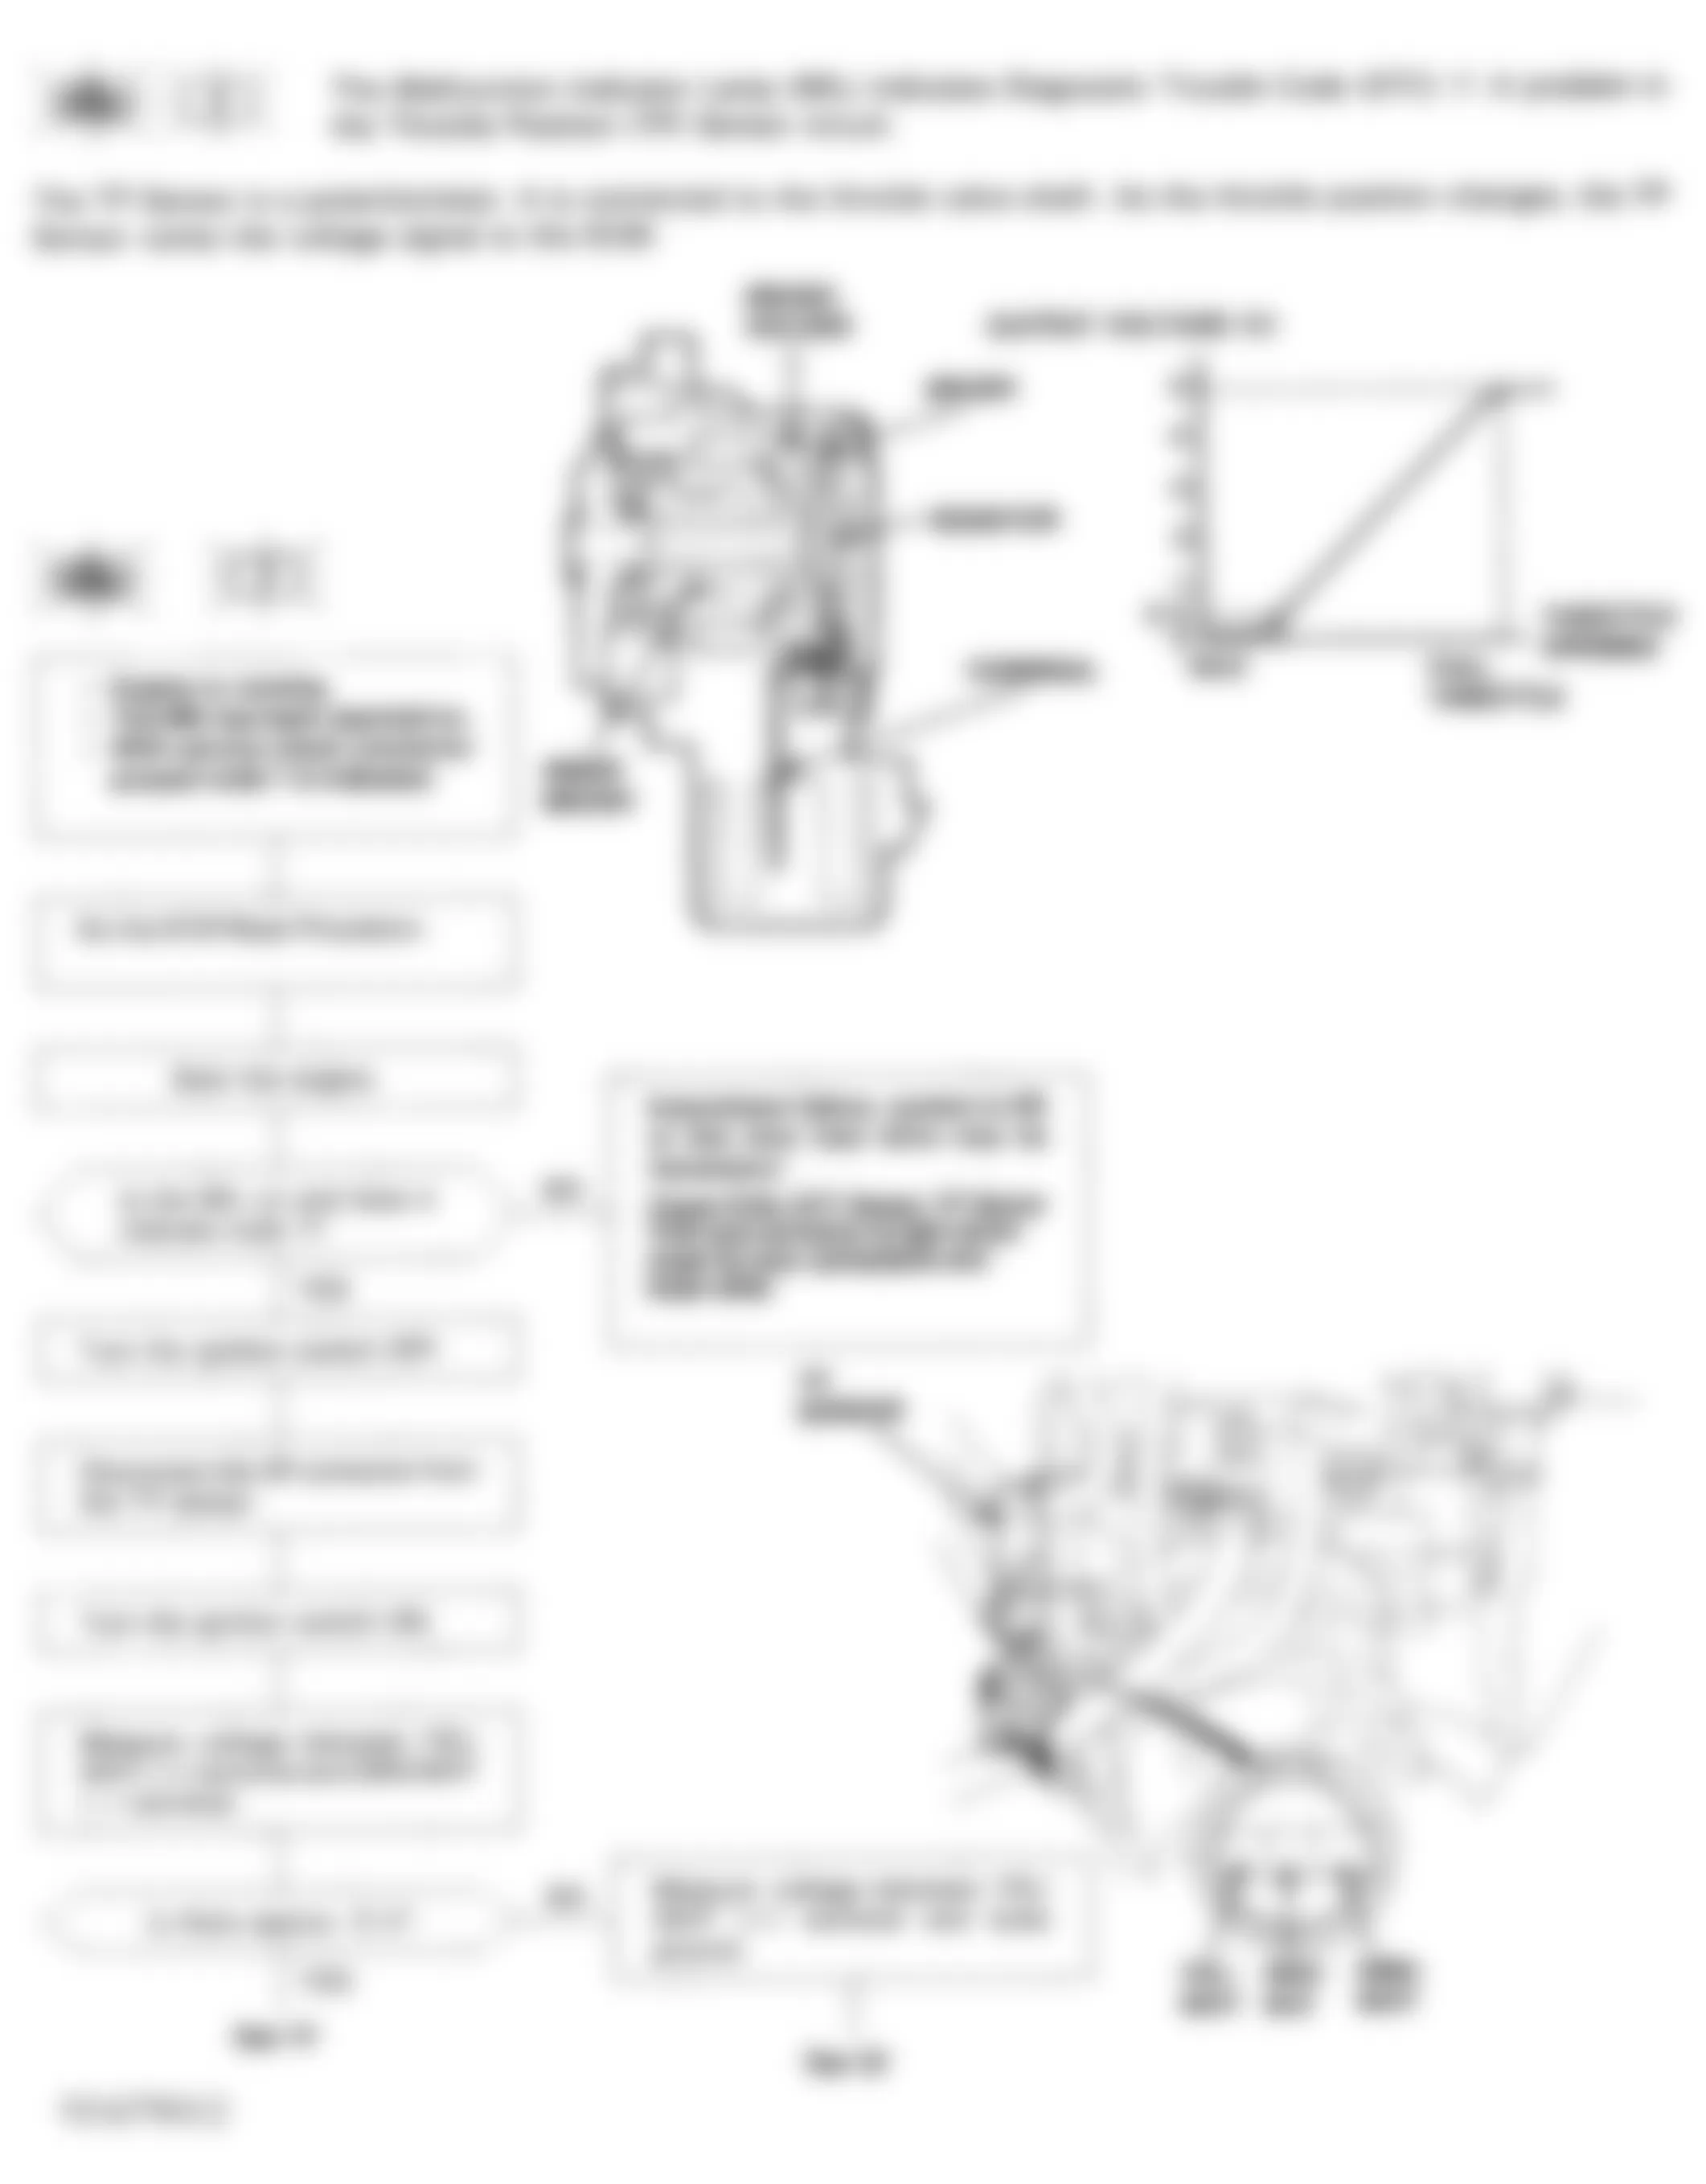 Honda Prelude Si 1993 - Component Locations -  Code 7 Flowchart, Throttle Position Sensor (1 of 2)